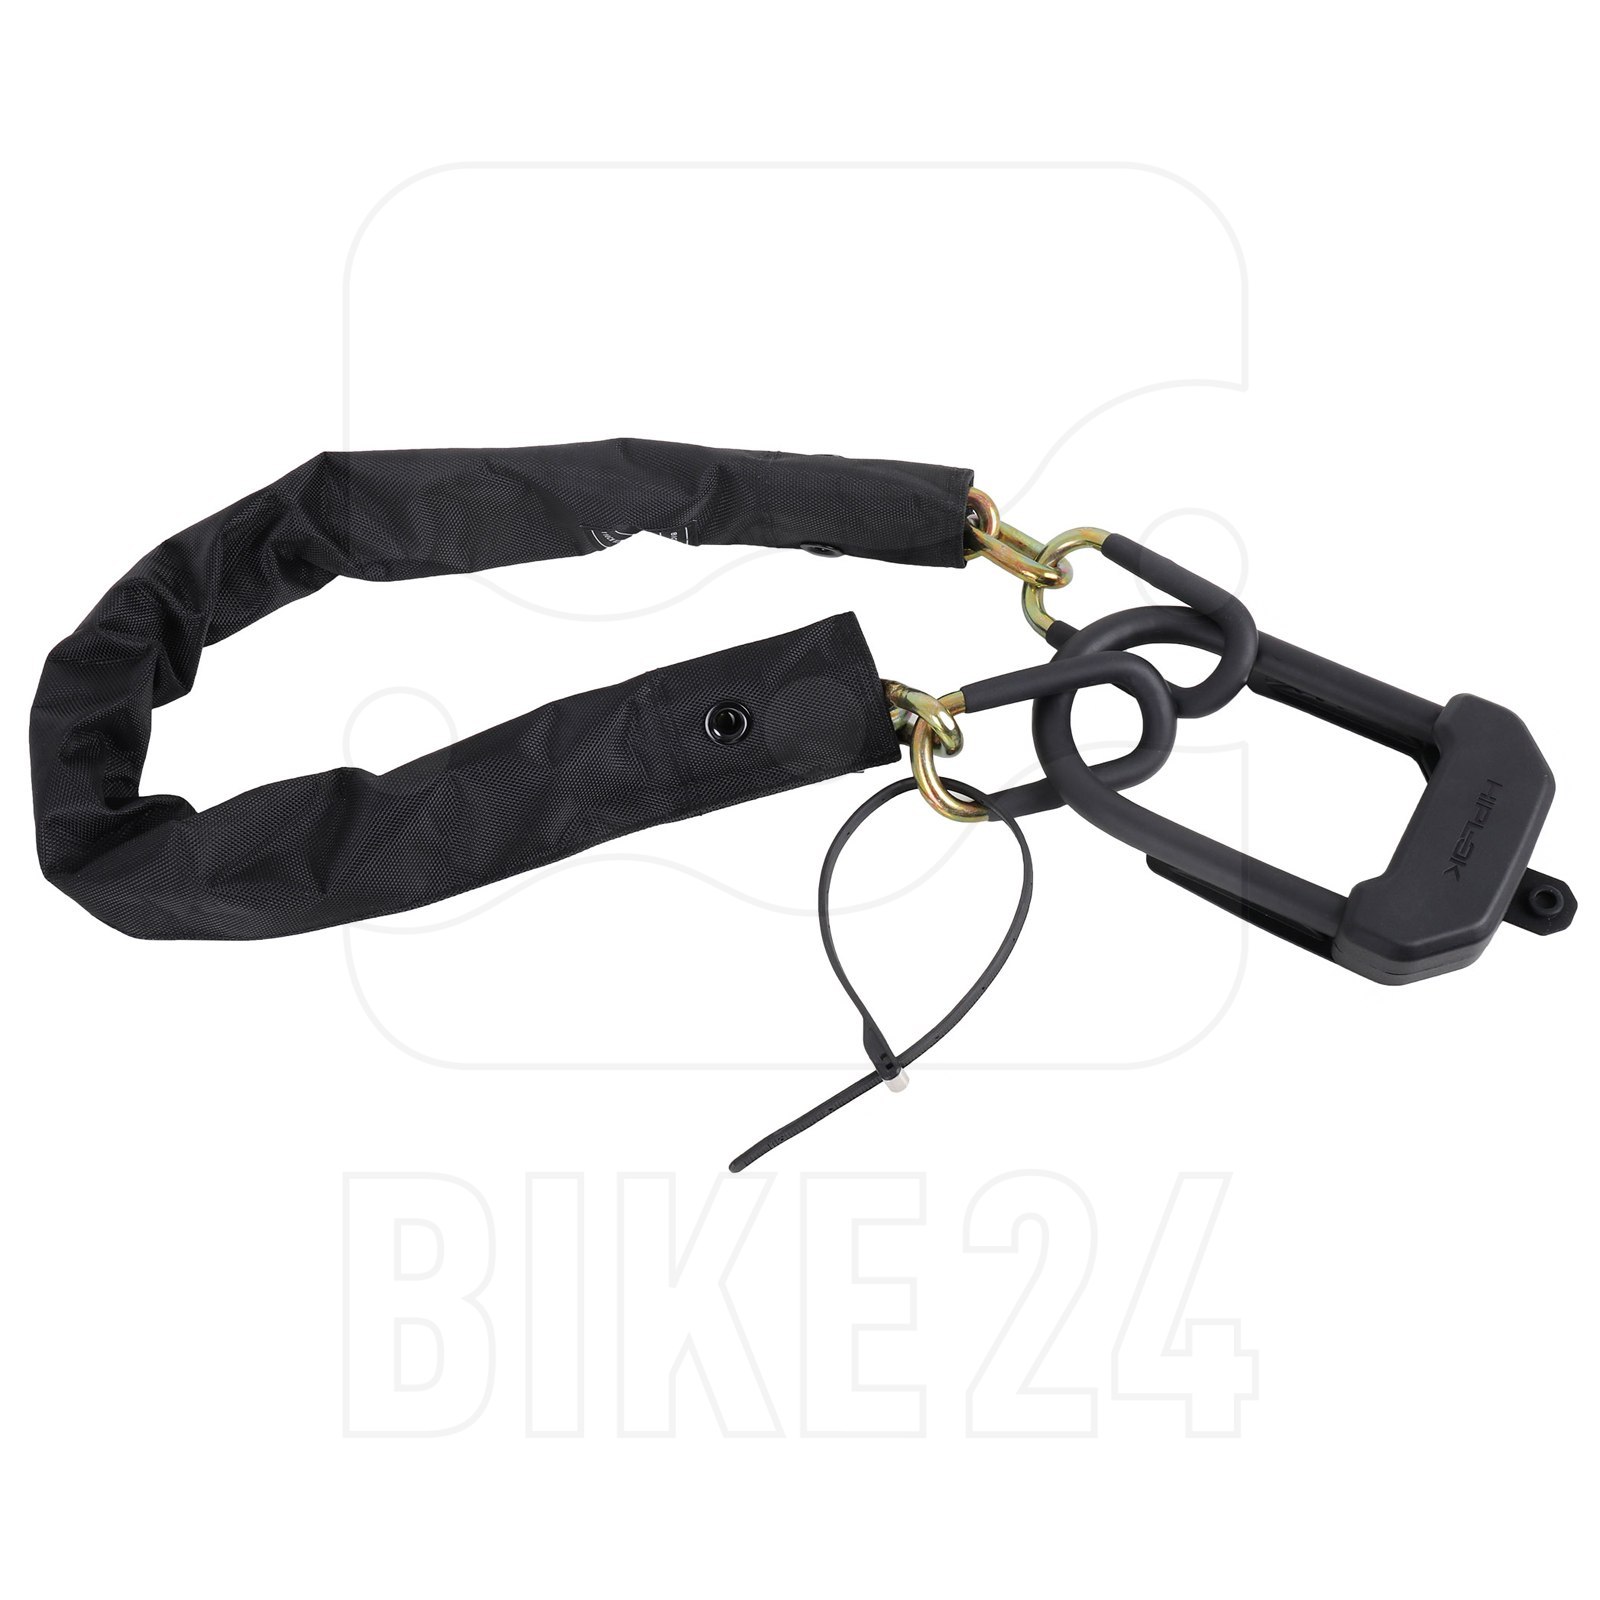 Picture of Hiplok E-DX Bike Lock Set - all black